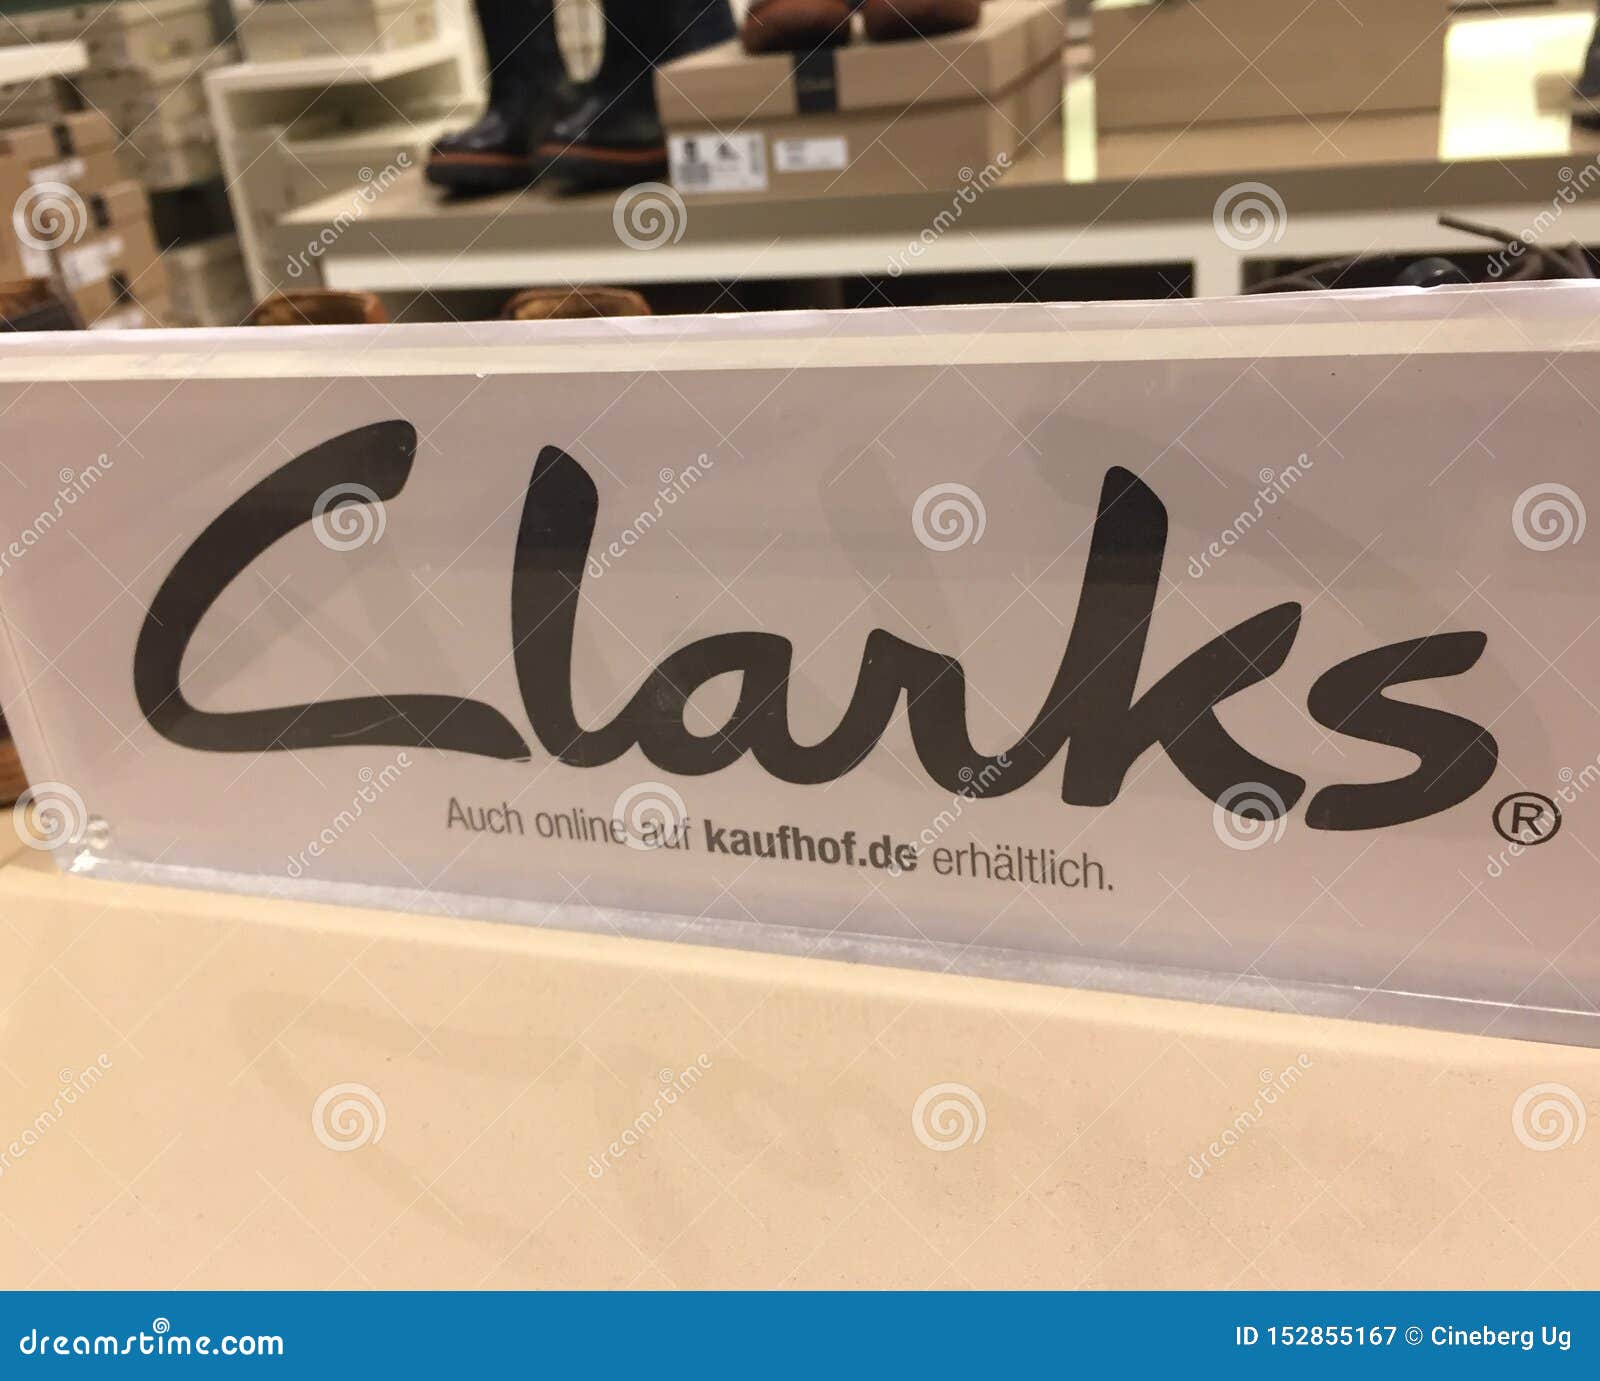 Clarks Shoe Manufacturer Sign Photography - brand, shop: 152855167